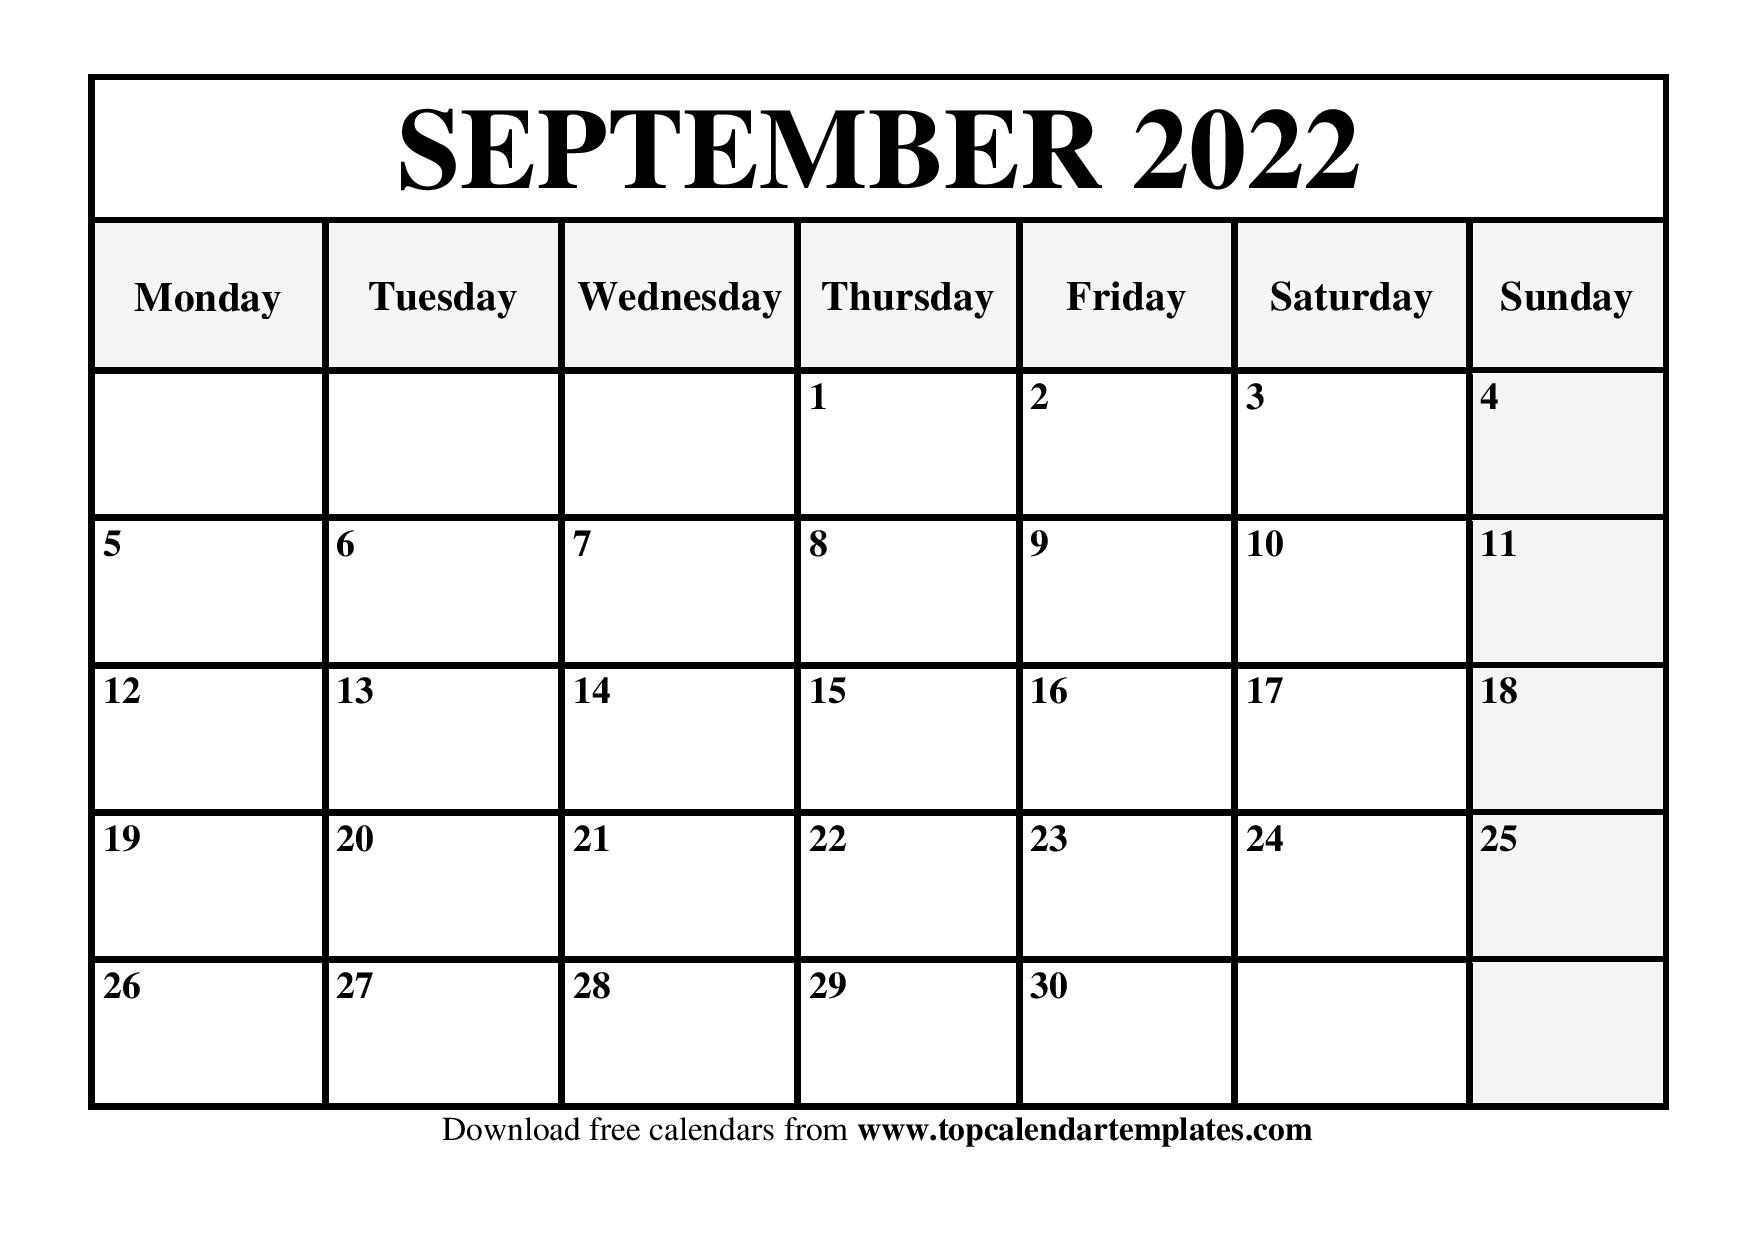 Sept 2022 Calendar Printable Calendar September 2022 Templates - Pdf, Word, Excel